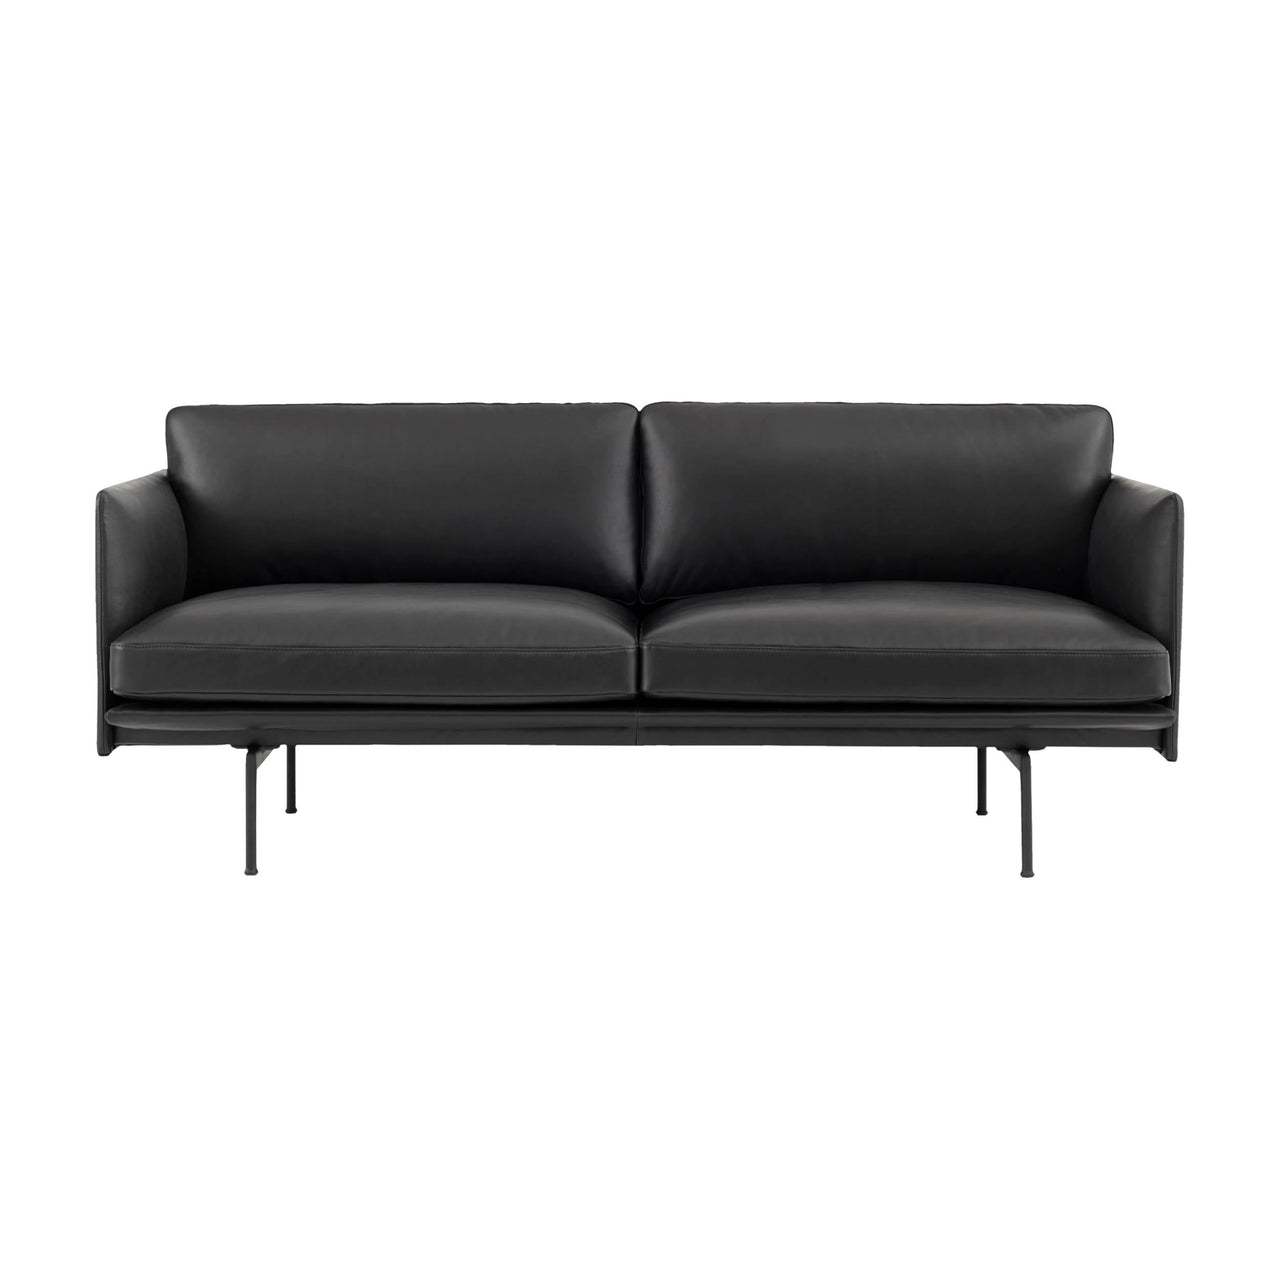 Outline Studio Sofa: Black